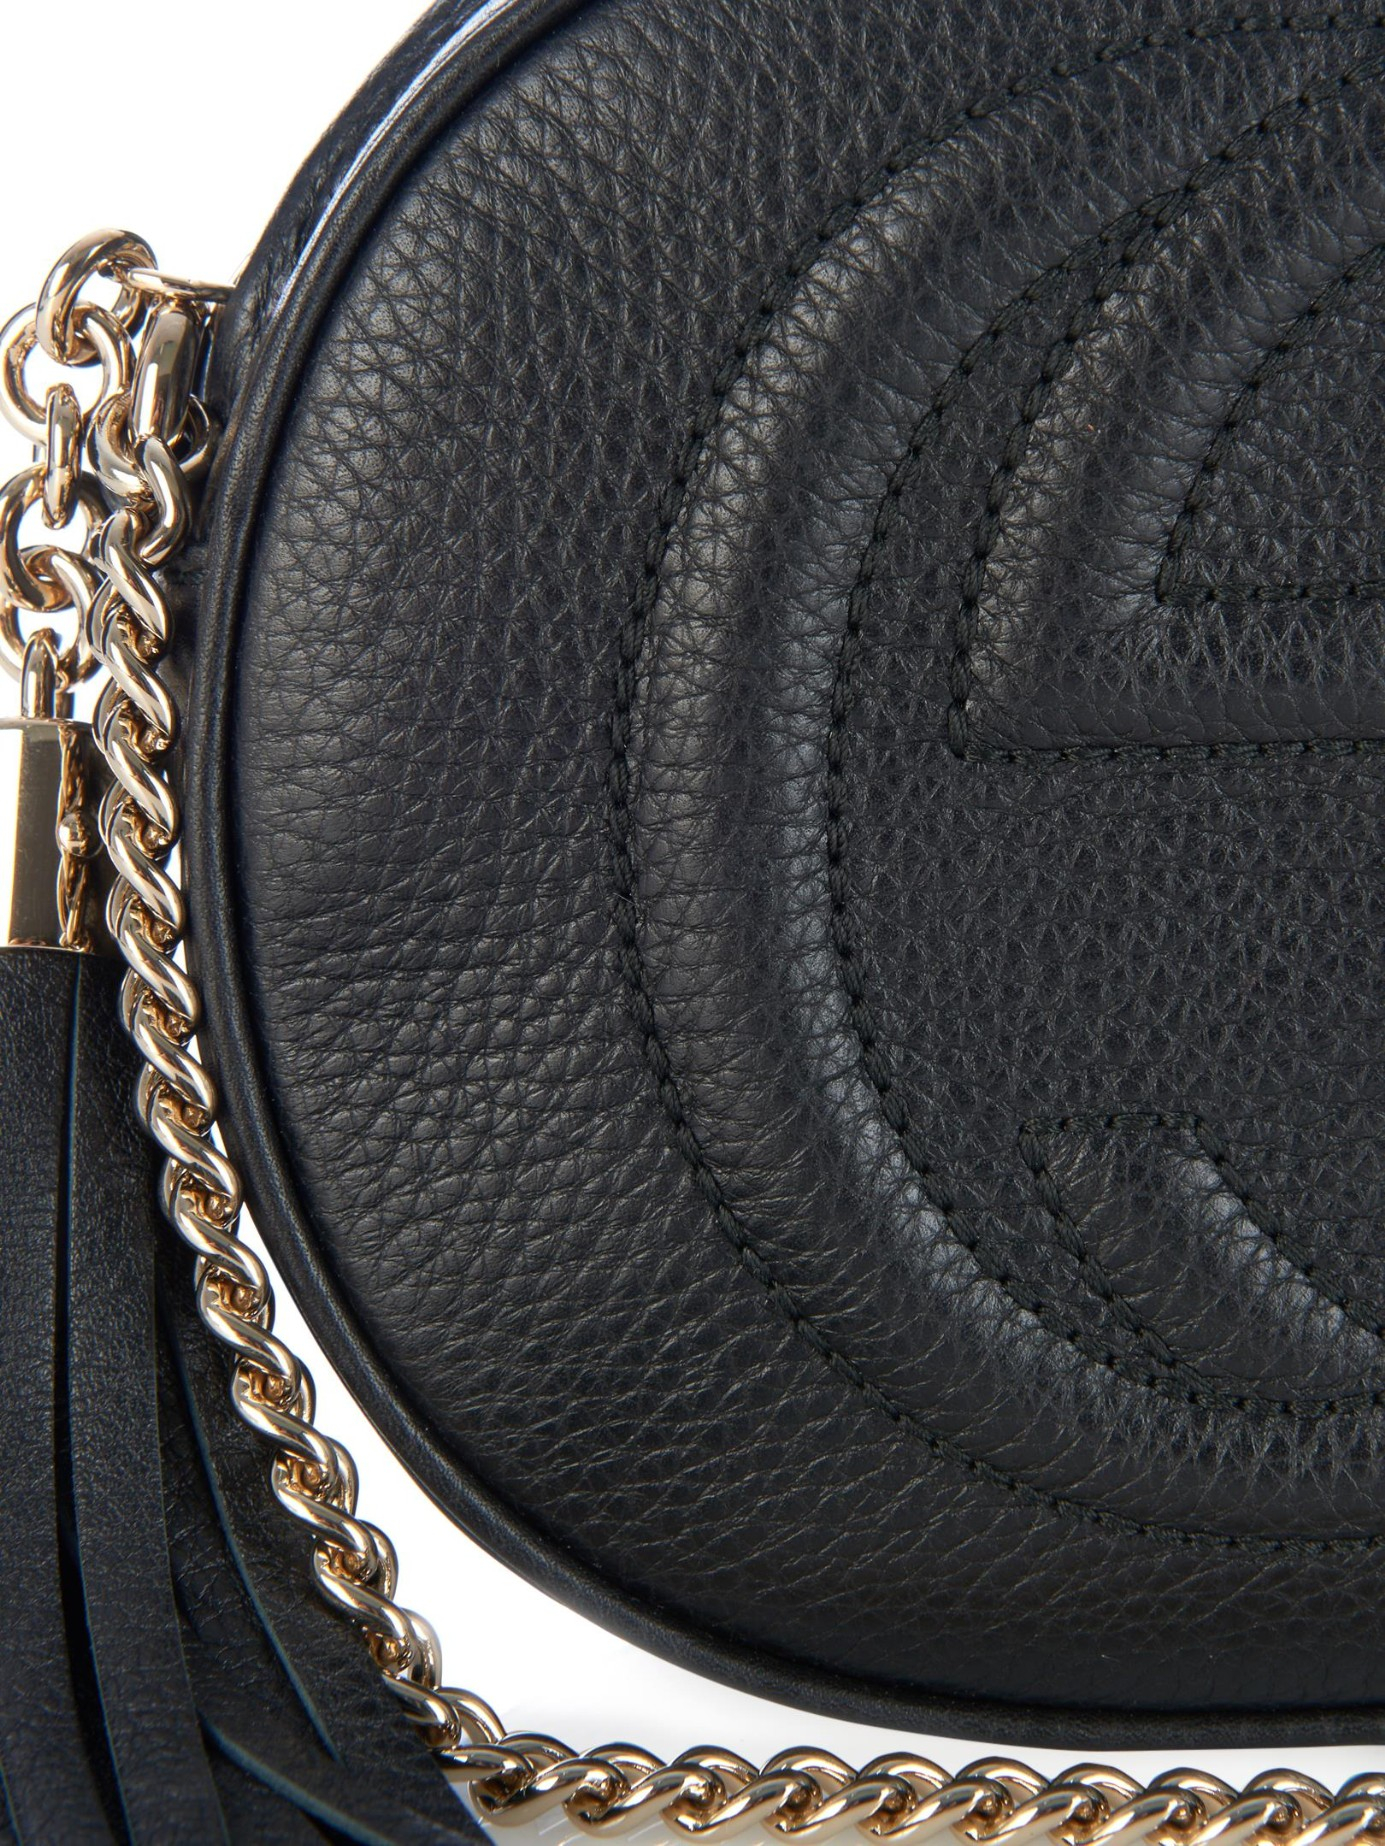 Gucci Mini Soho Chain-Strap Cross-Body Bag in Black | Lyst